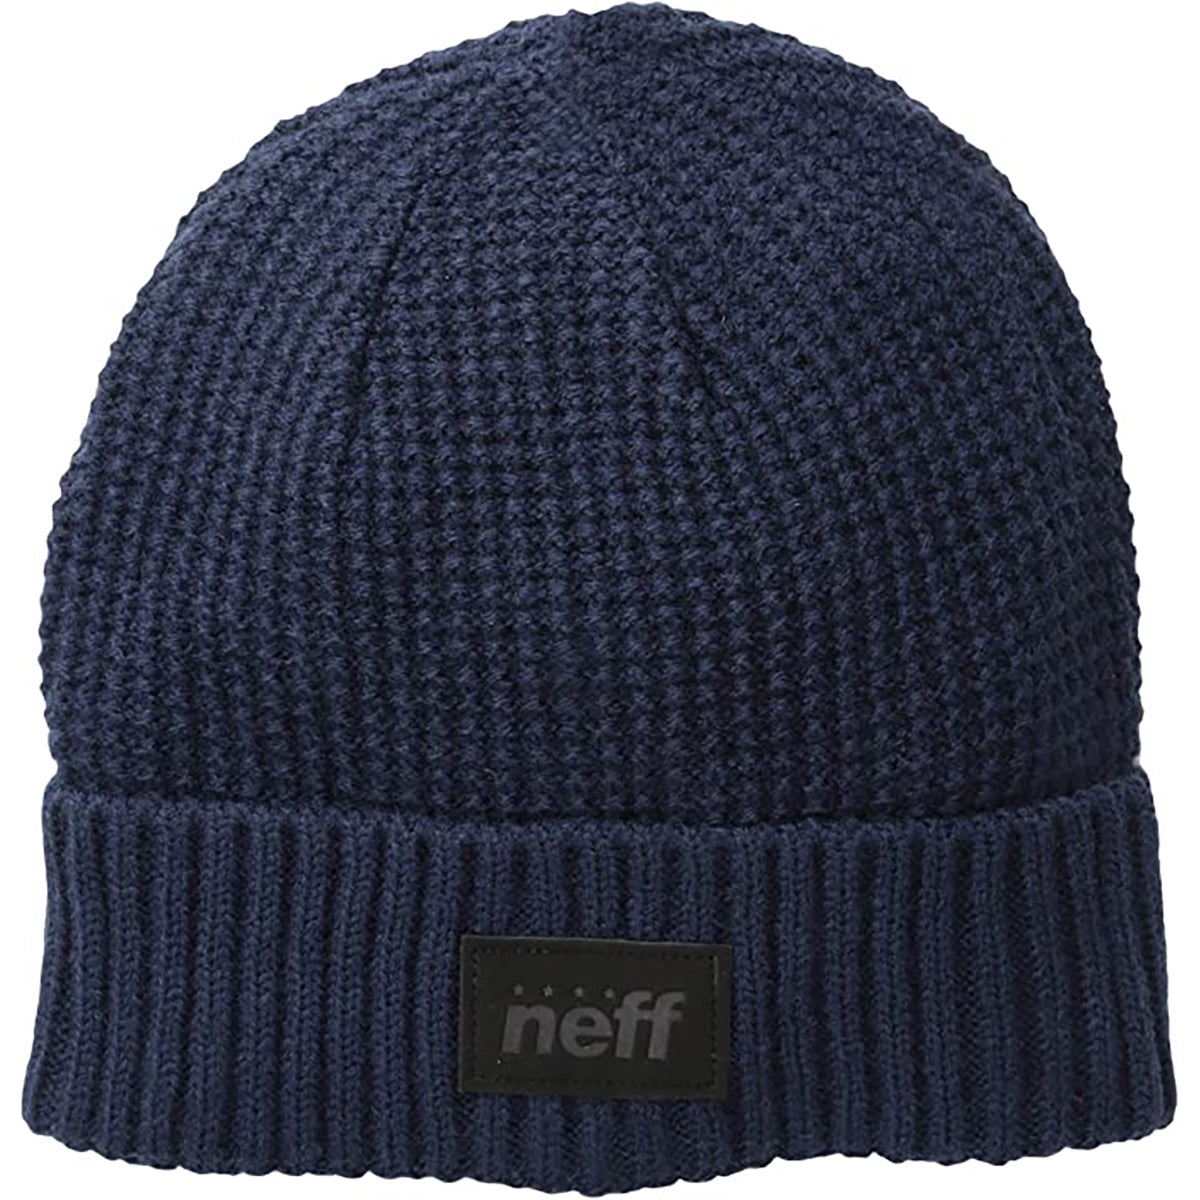 Neff Therm Men's Beanie Hats - Black